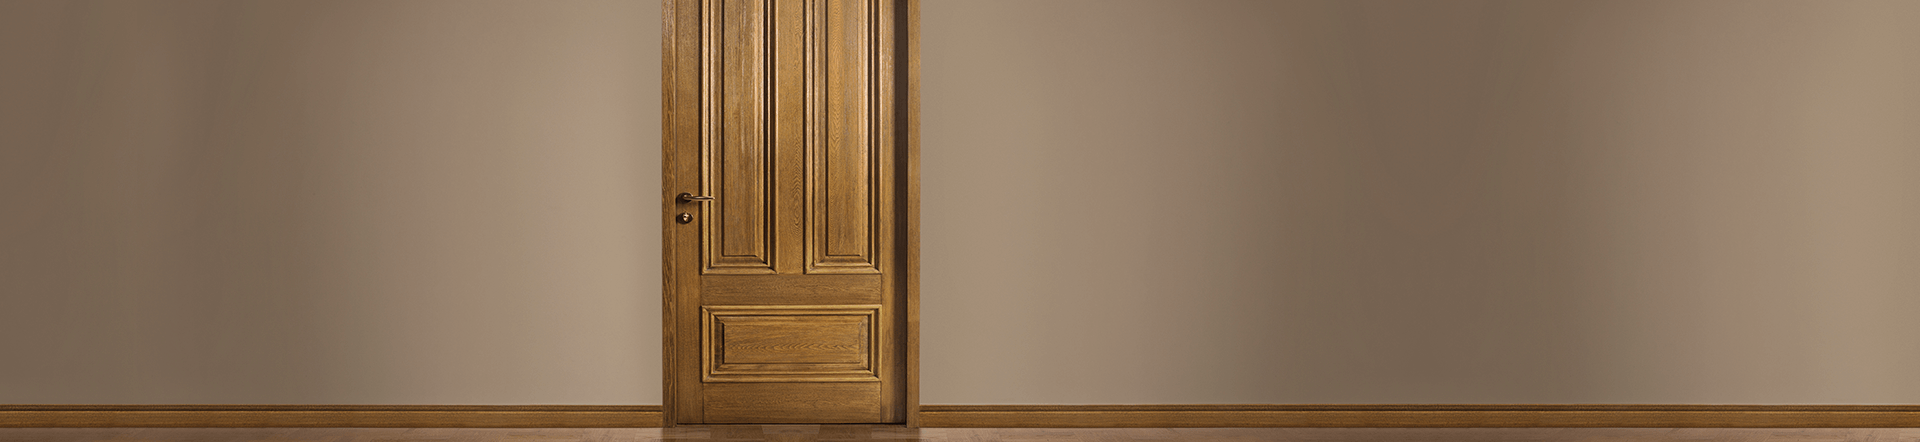 Hemlock Timber - Premium Doors & Windows Manufacturer, Gurugram